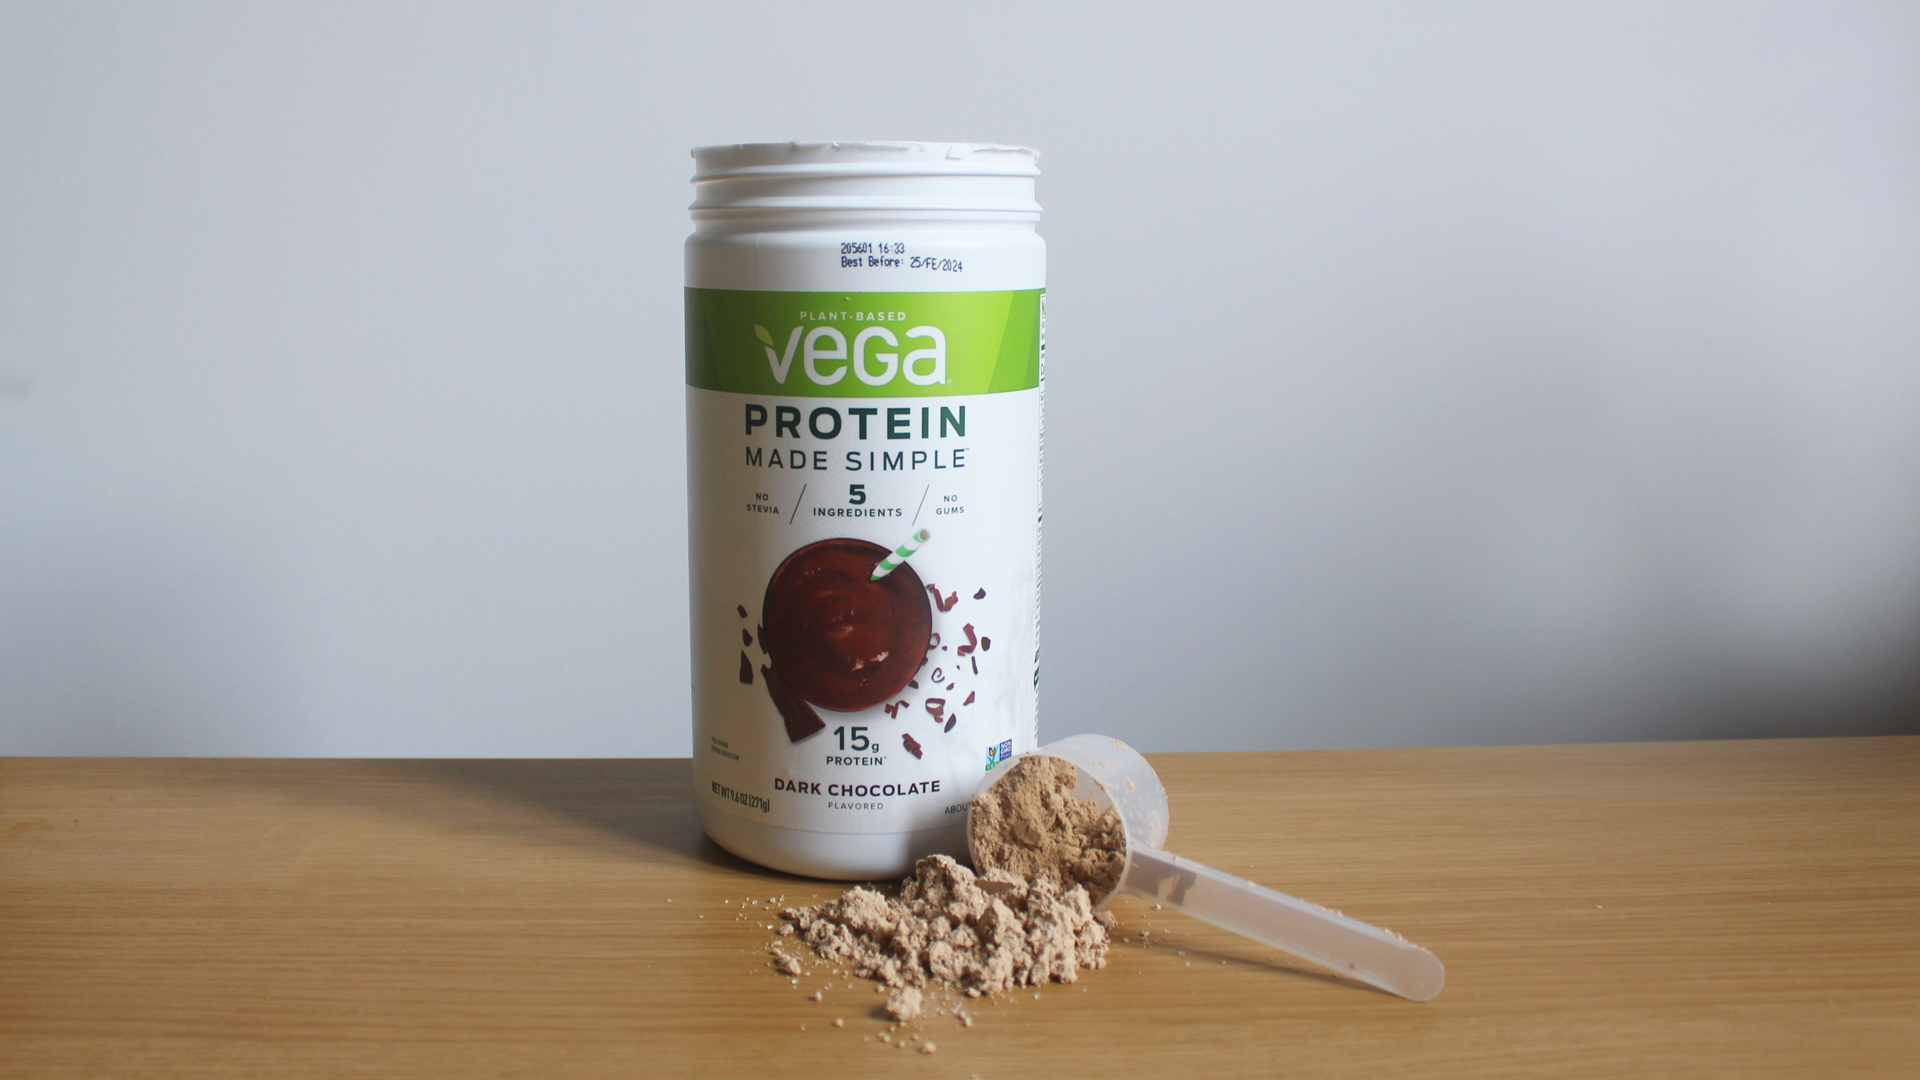 vega protein made simple in dark chocolate flavor